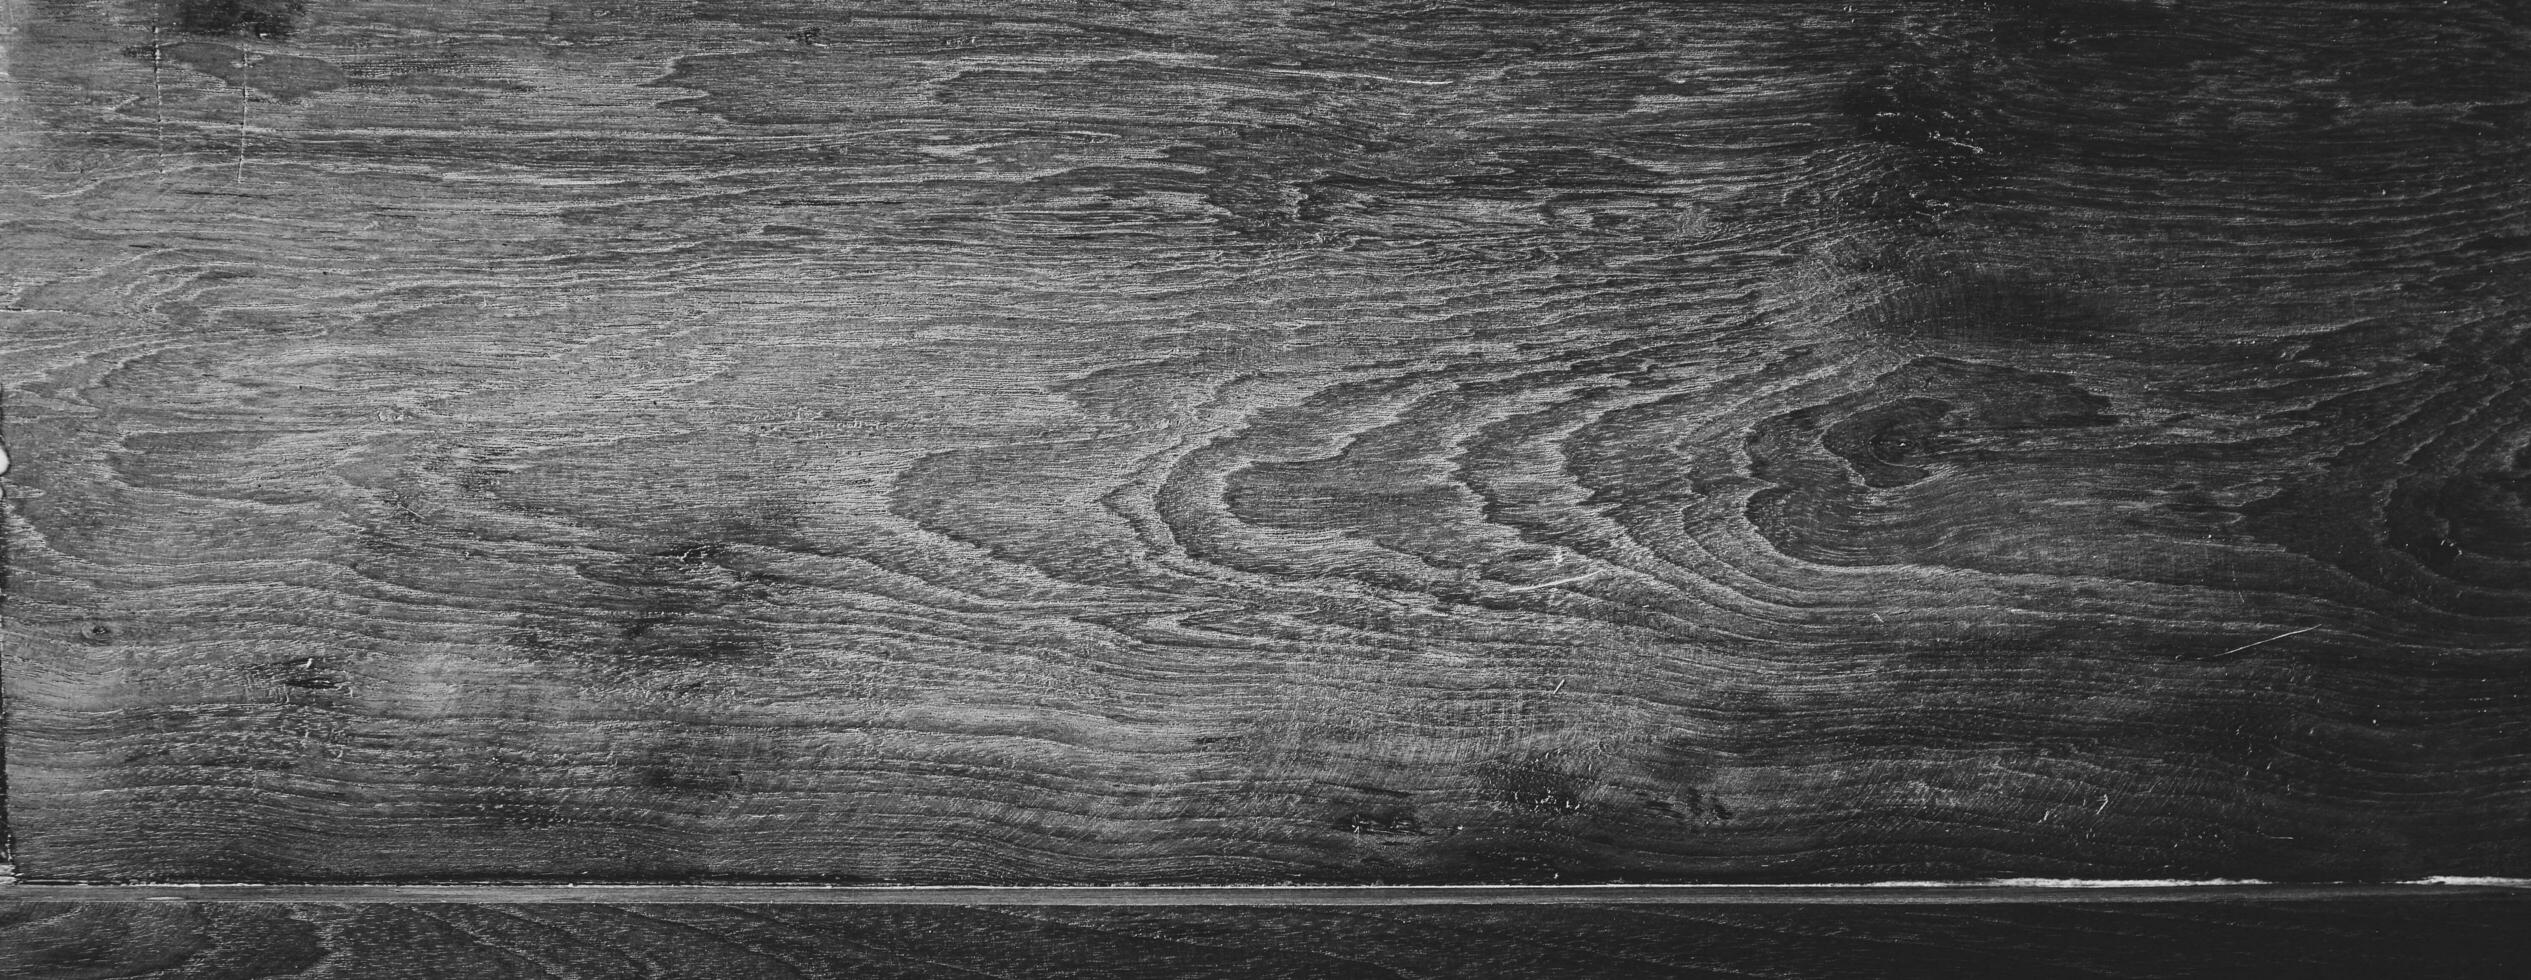 zwart en wit oud houten structuur abstract achtergrond foto